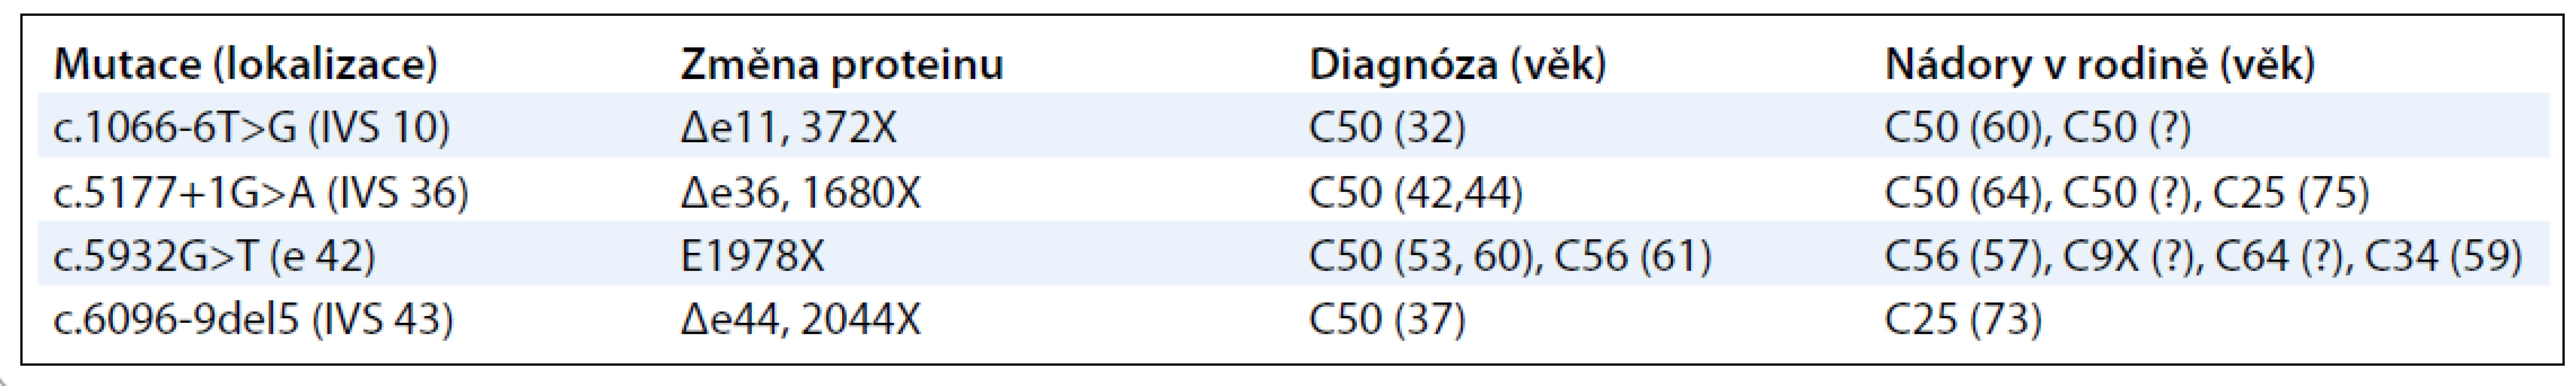 Výsledky mutační analýzy genu ATM u 161 vysoce rizikových pacientek s karcinomem prsu z ČR.